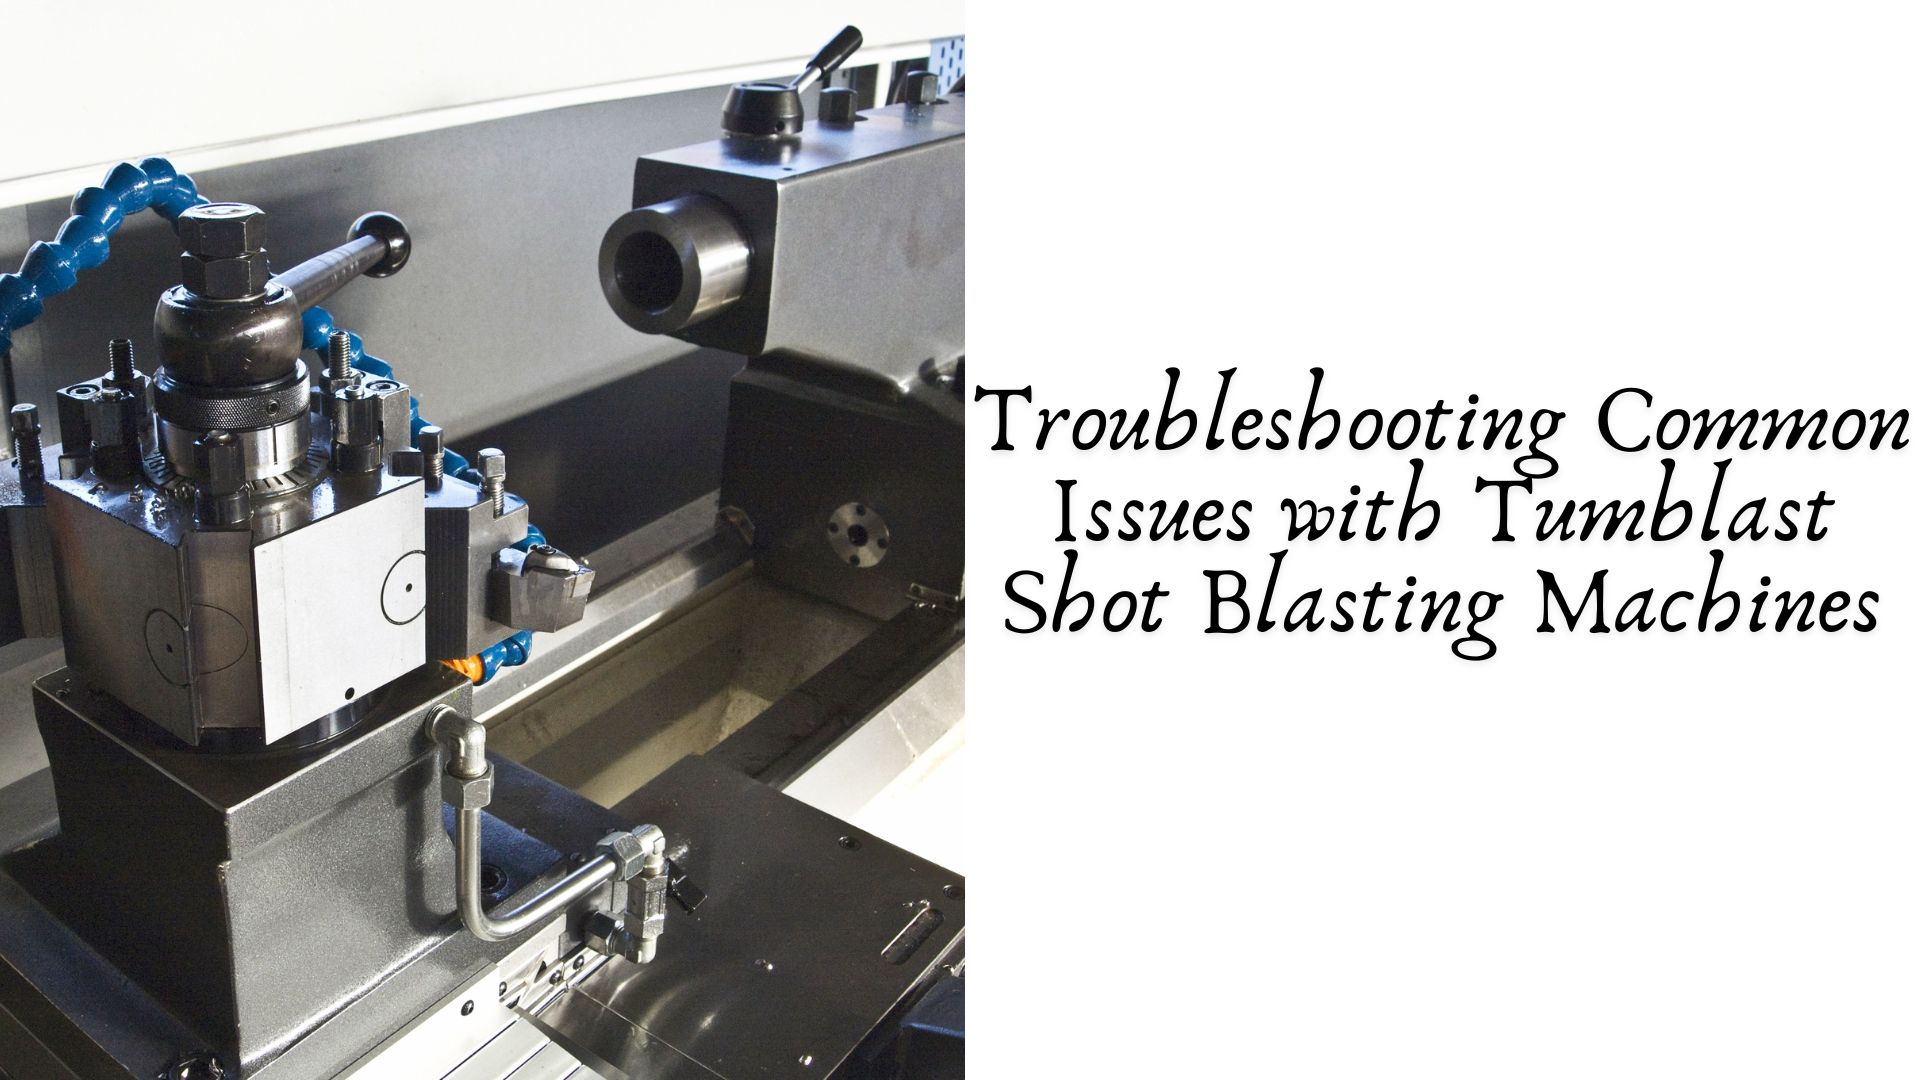 Troubleshooting Common Issues with Tumblast Shot Blasting Machines